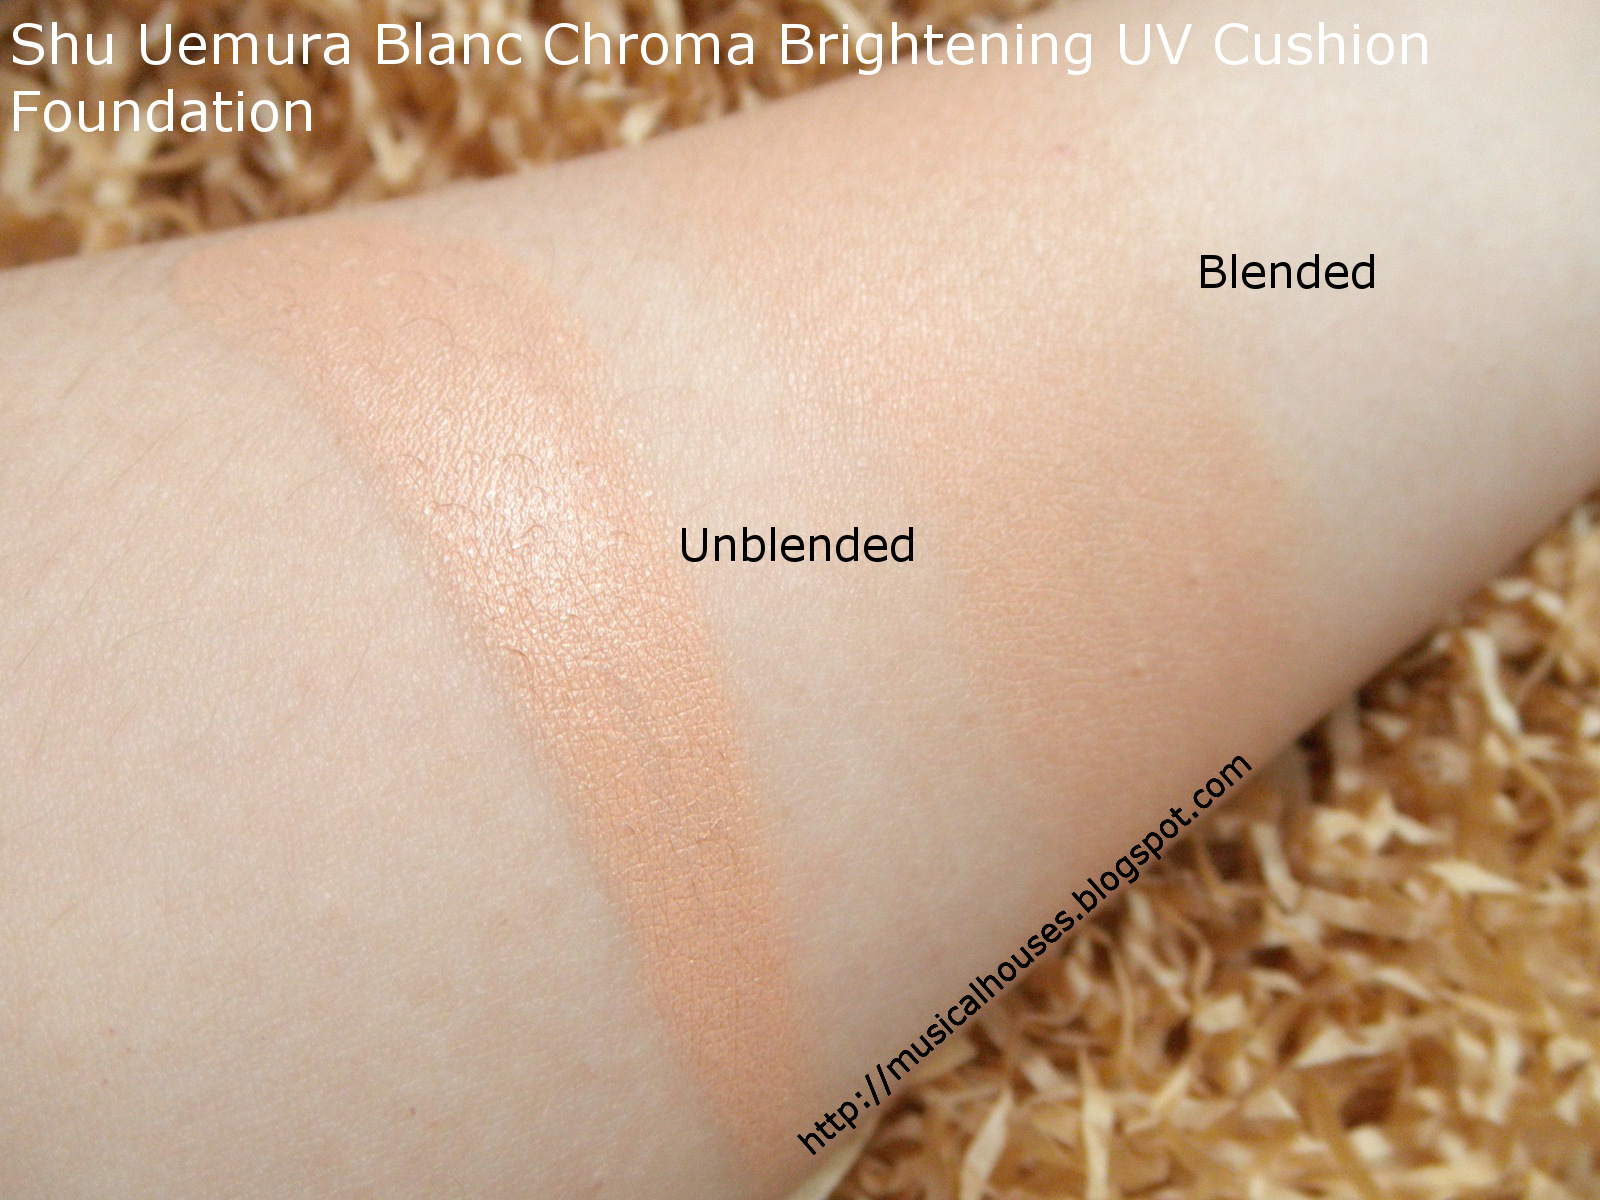 Shu Uemura Blanc Chroma Brightening UV Cushion Swatch Warm Sand